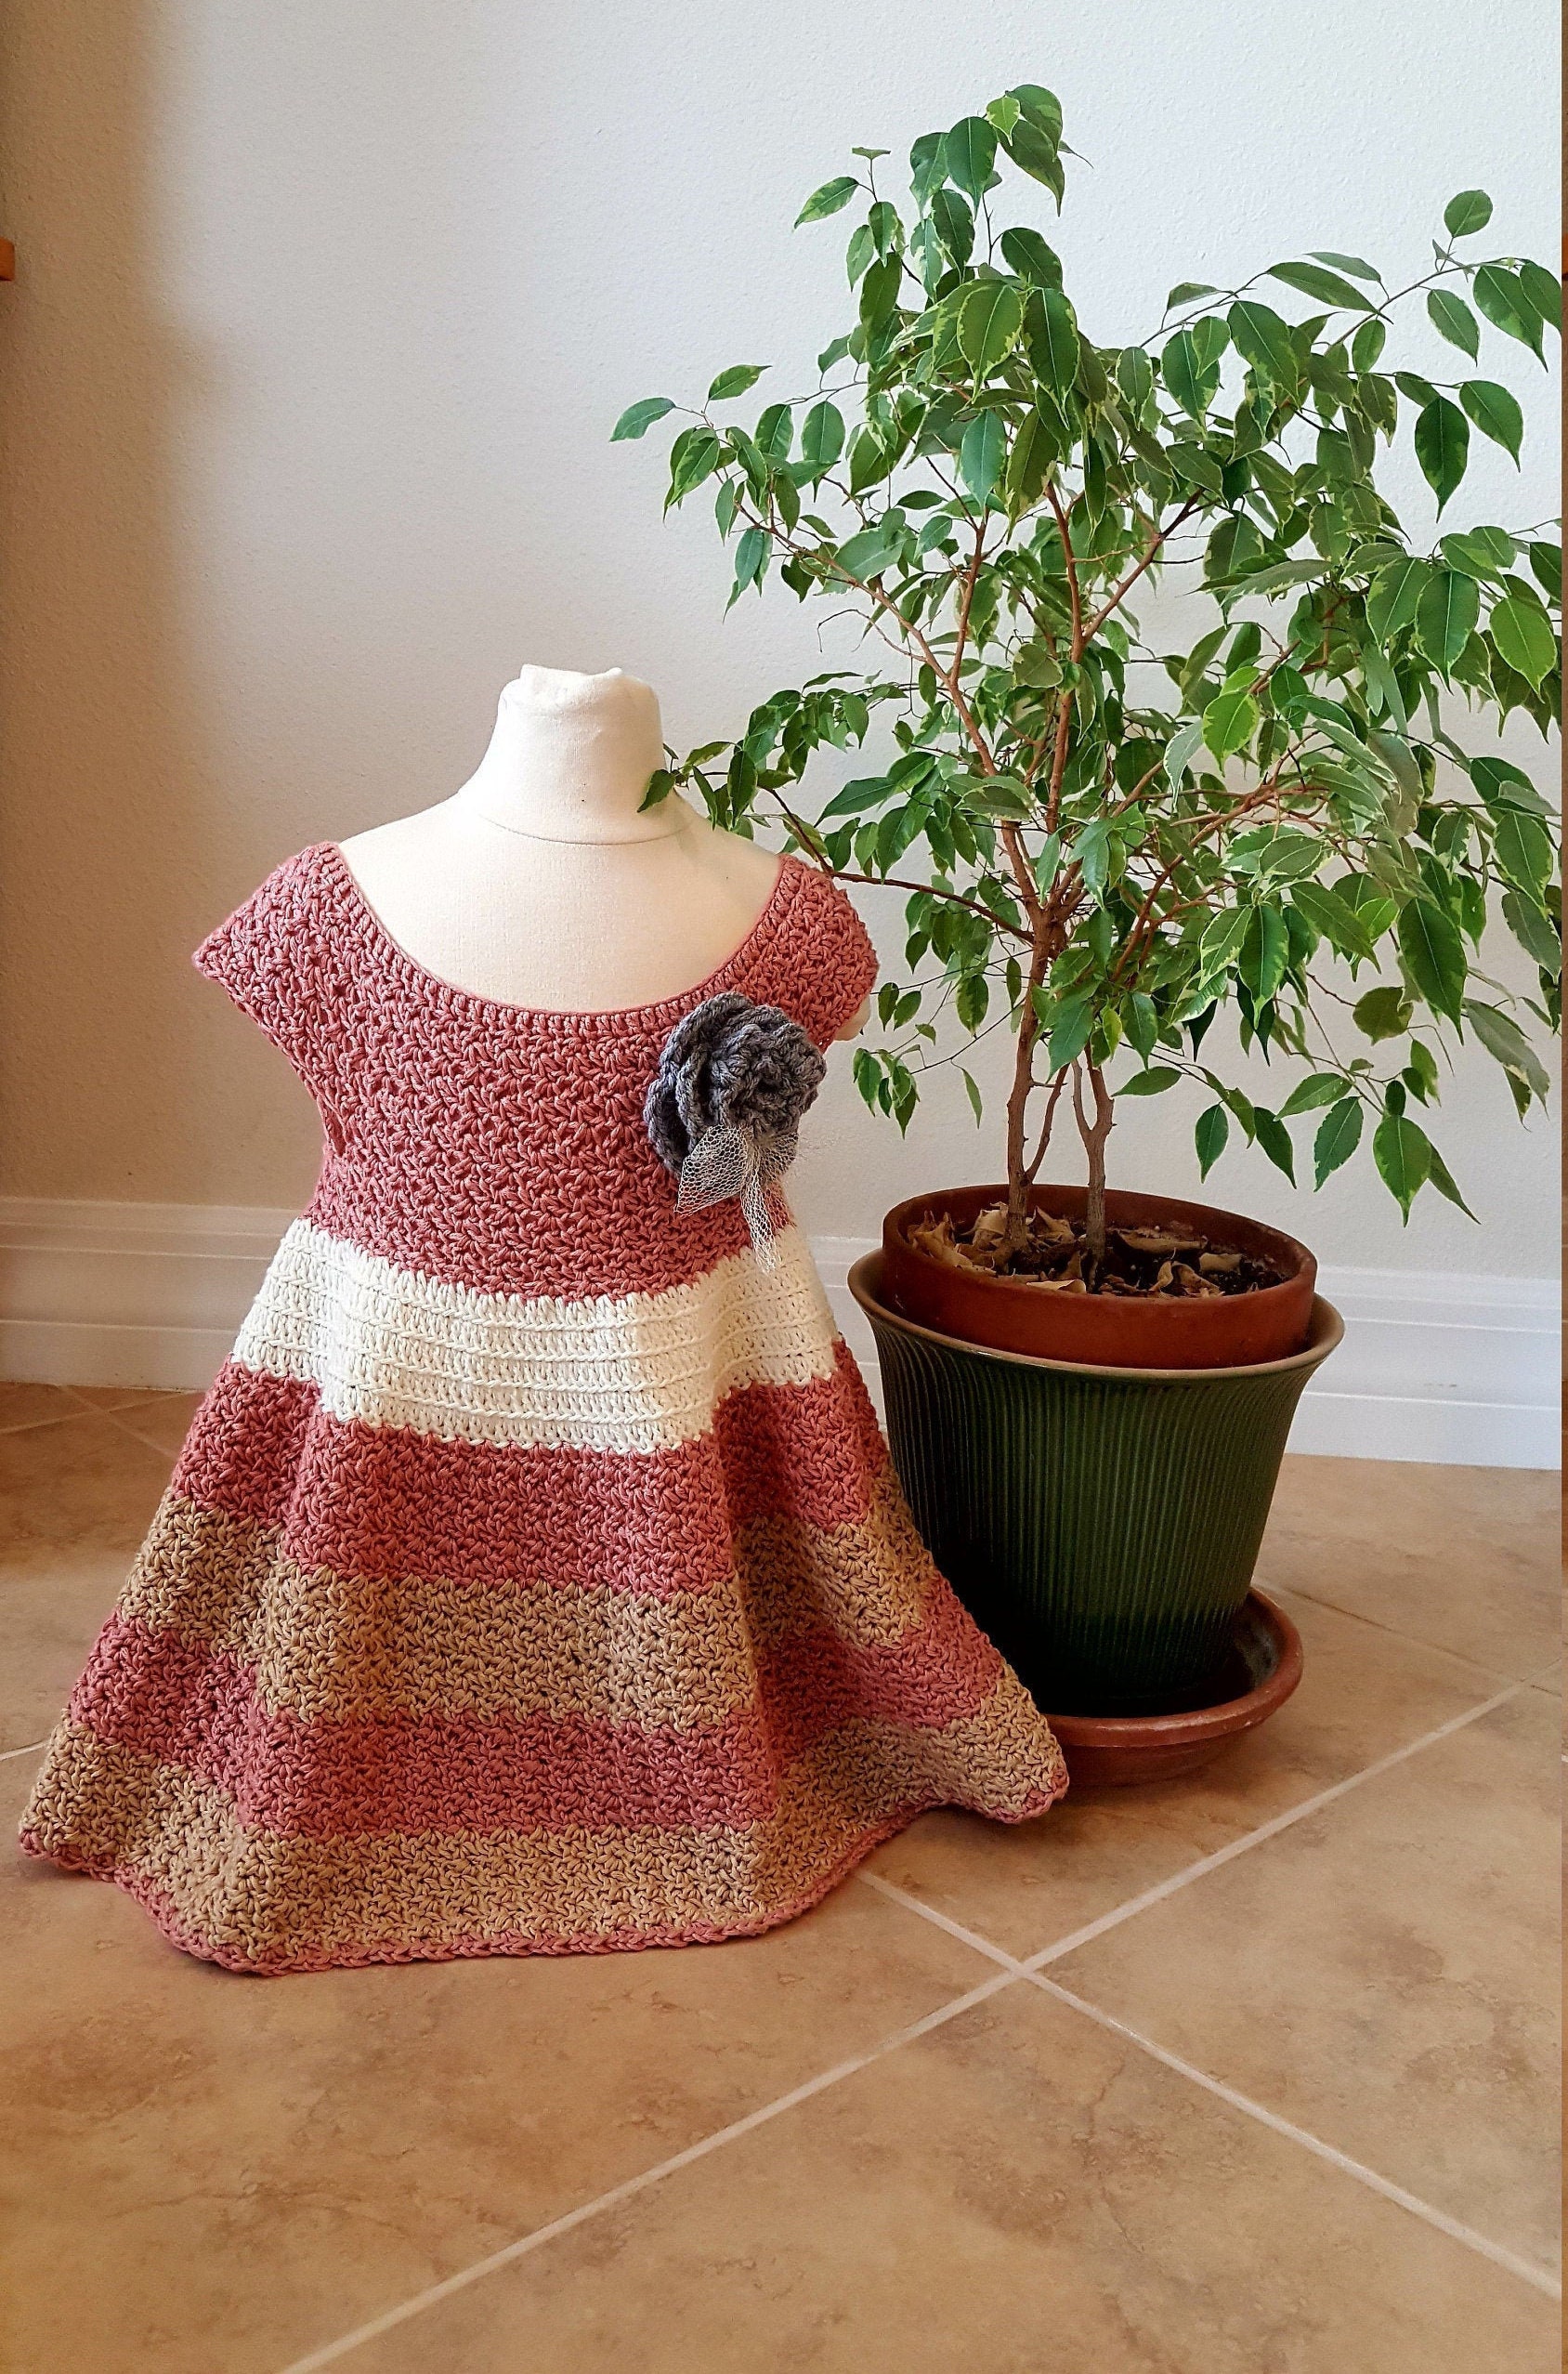 Crochet Dress PATTERN Like a Pink Cloud Dress sizes up to 8 Years